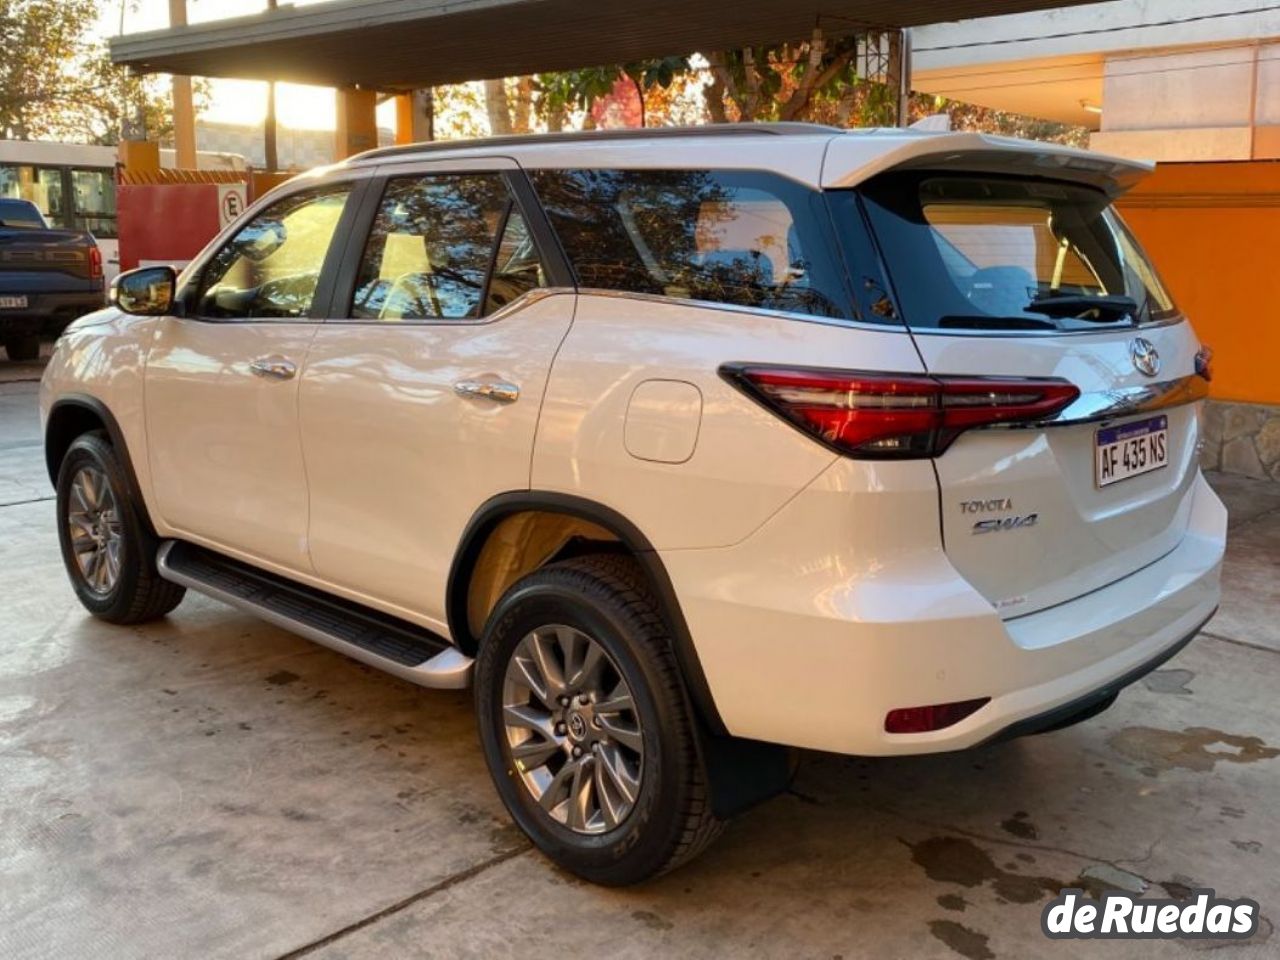 Toyota Hilux SW4 Nuevo en San Juan, deRuedas